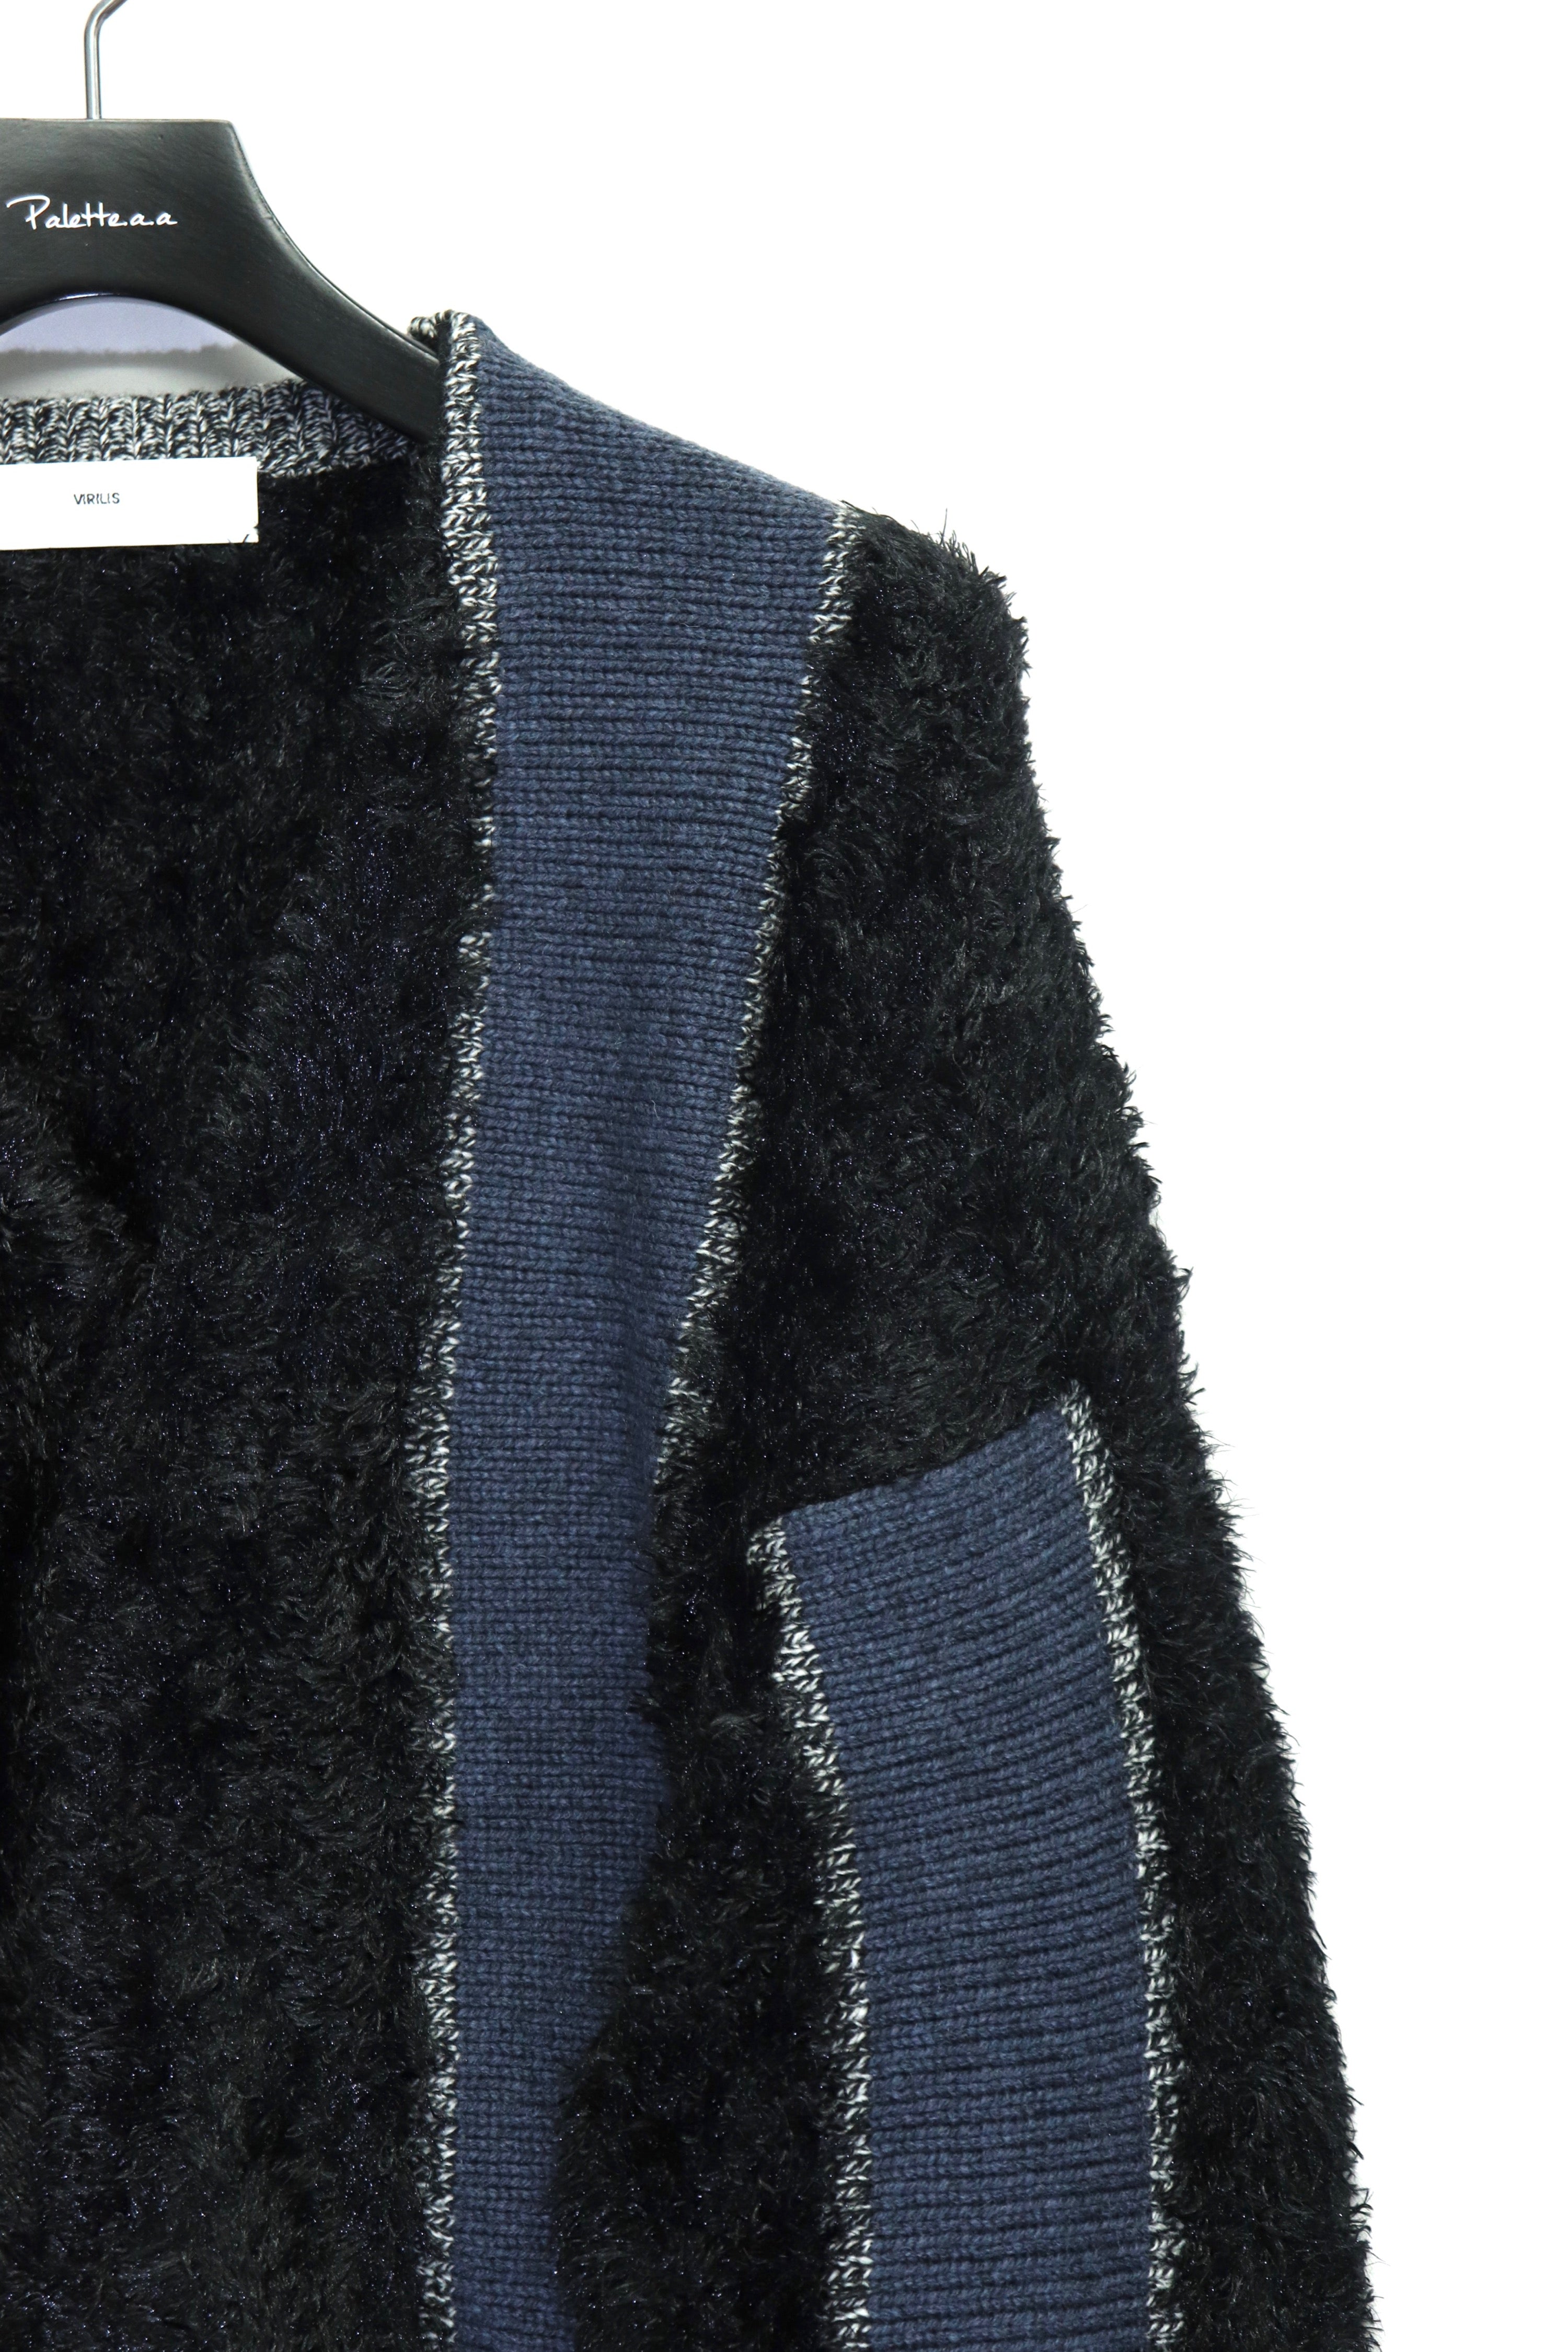 TOGA VIRILIS(トーガ ビリリース)のStripe knit cardigan NAVYの通販